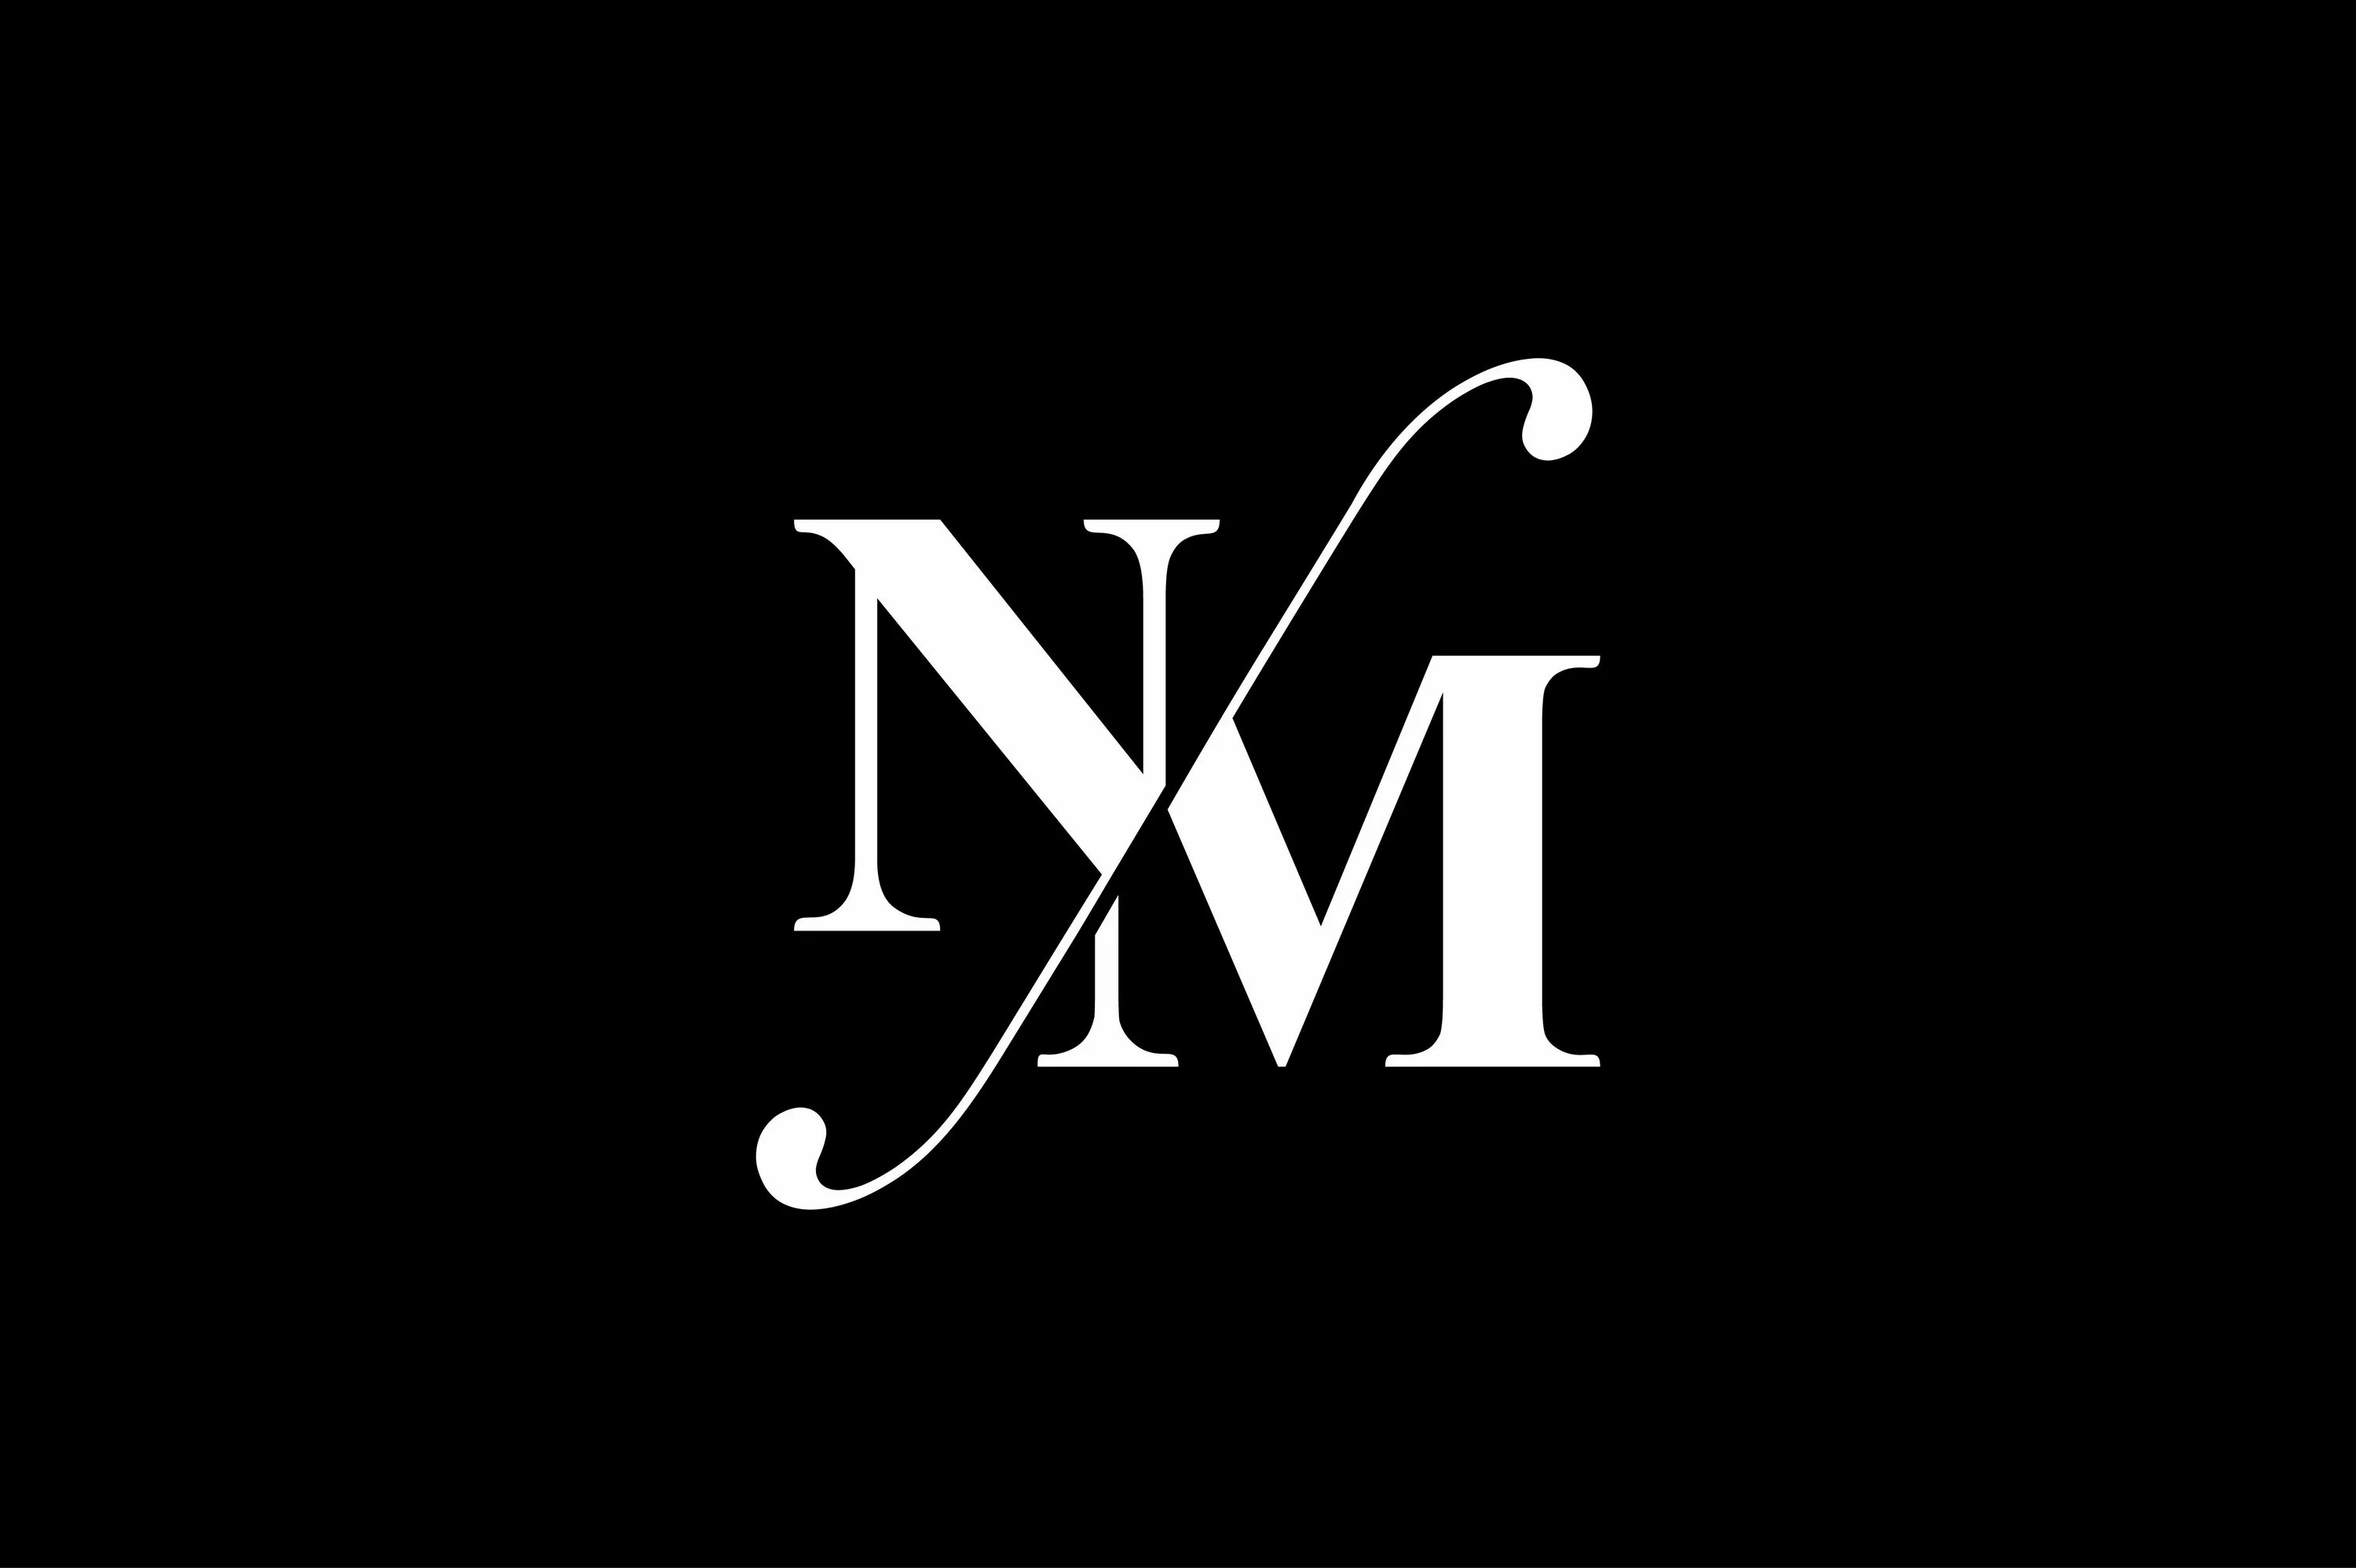 Ни n. N M логотип. Логотип с буквами NM. Логотип из двух букв м. Монограмма хм.